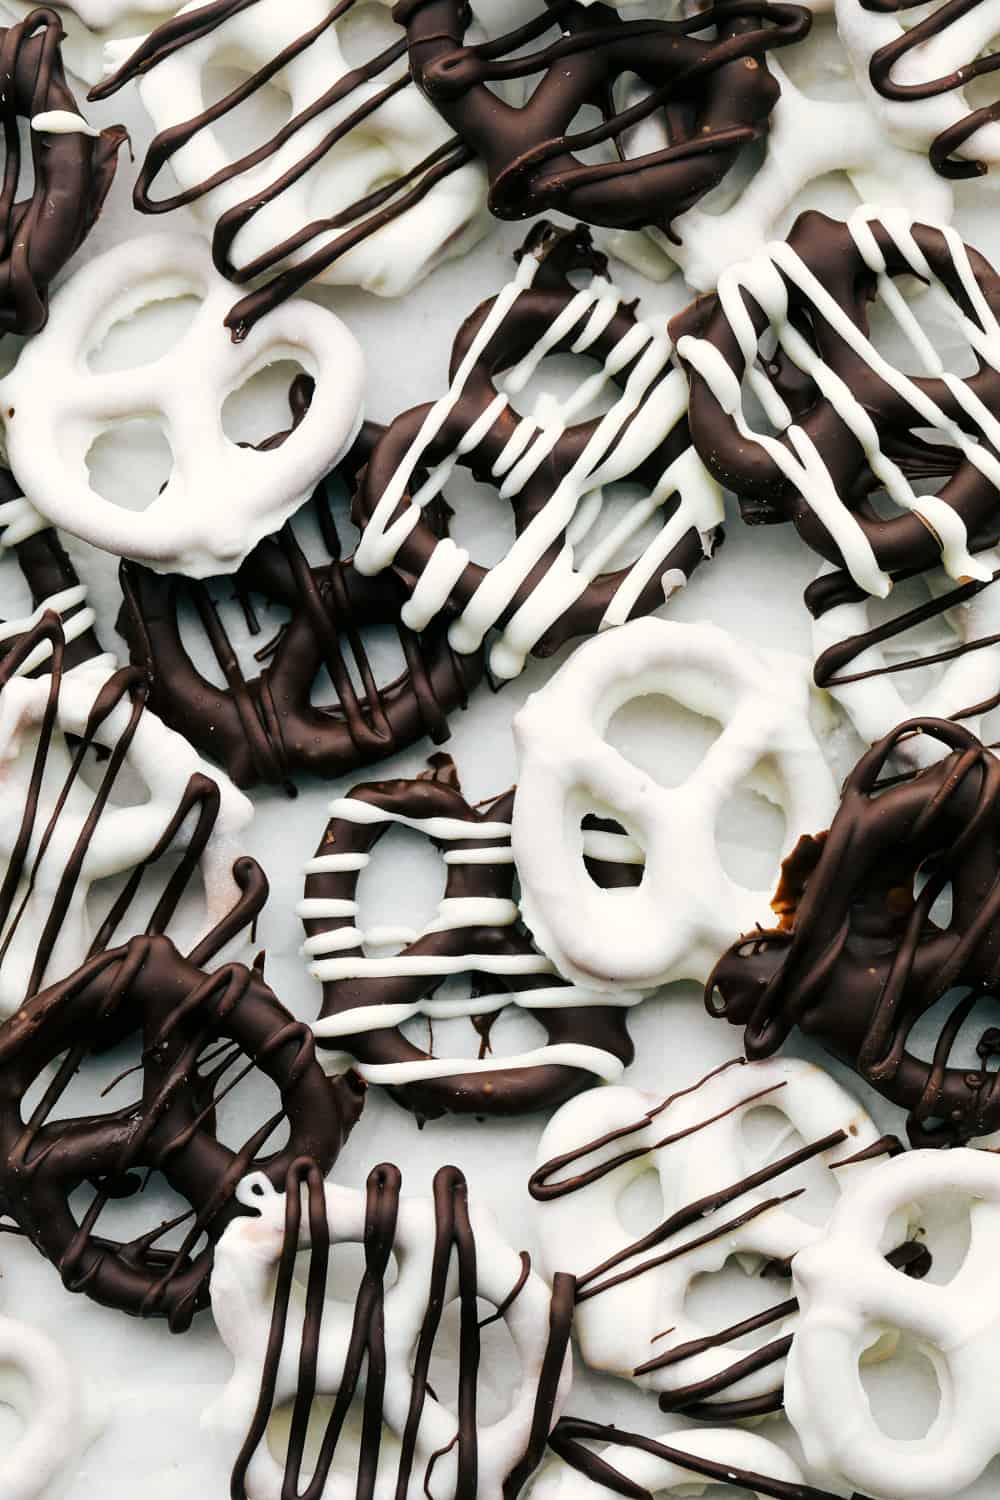 White and Dark chocolate covered pretzels.